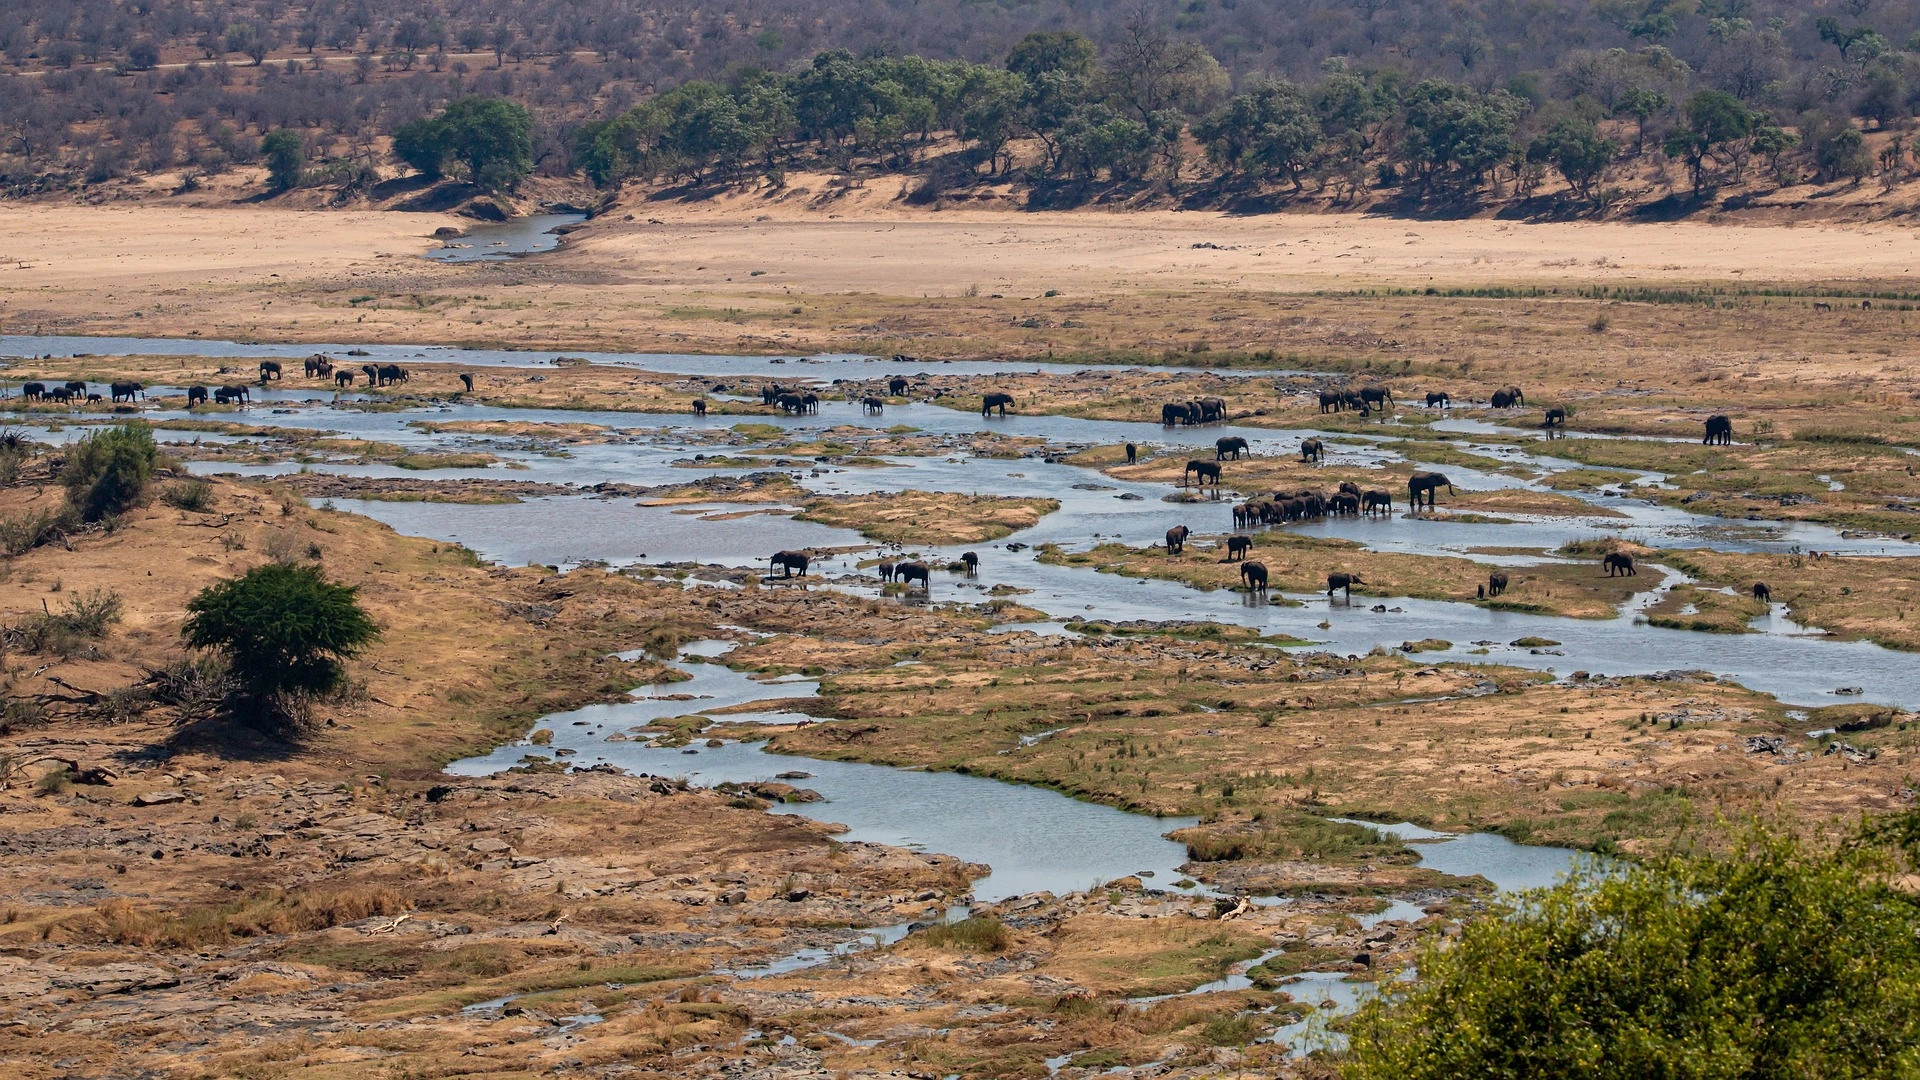 South Africa Safari Honeymoon - elephants in Kruger National Park.